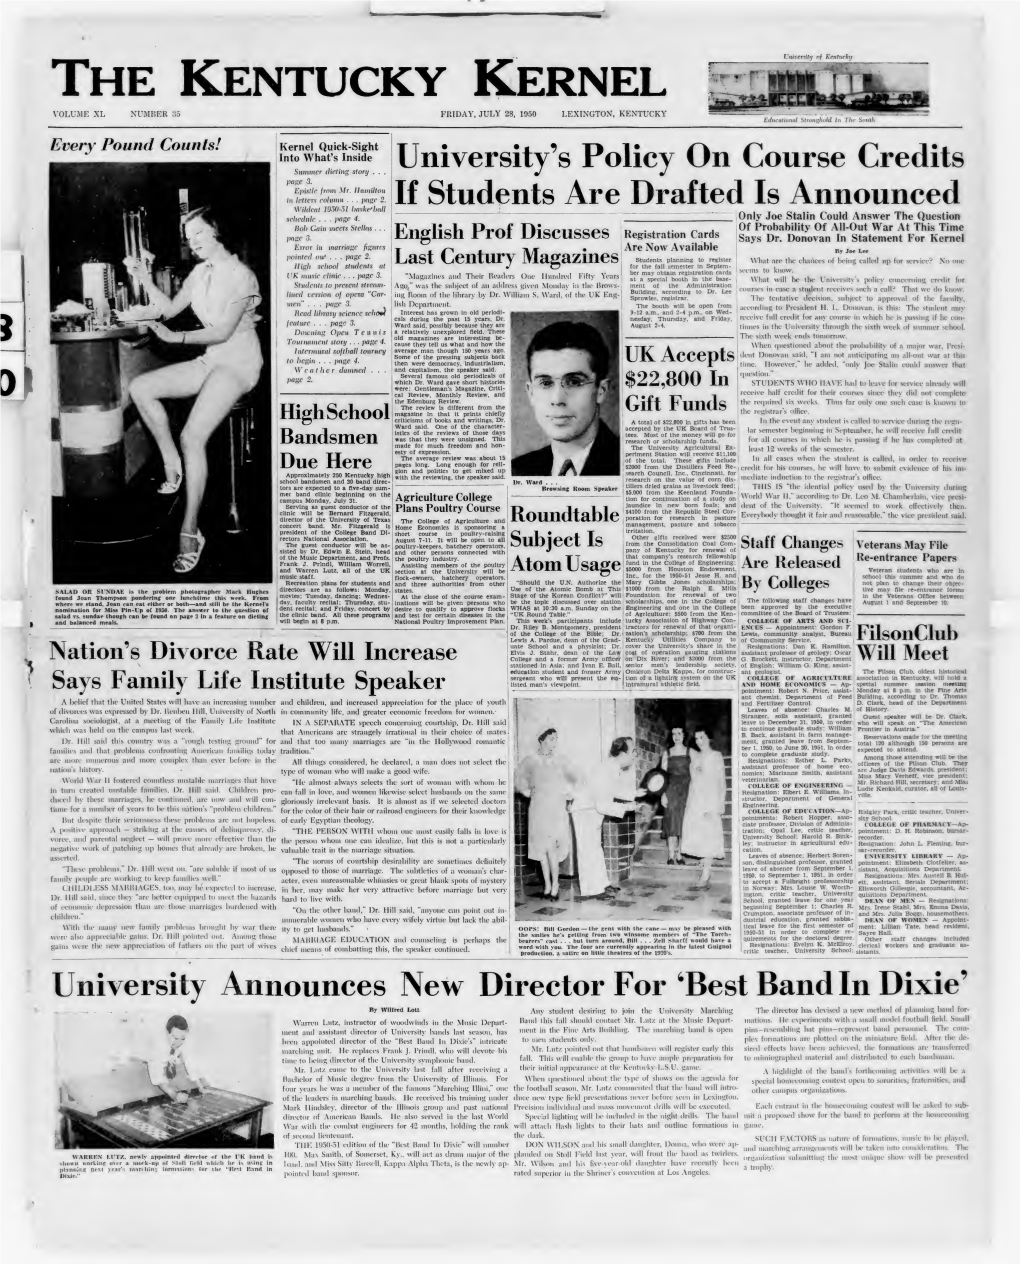 The Kentucky Kernel: 1950-07-28